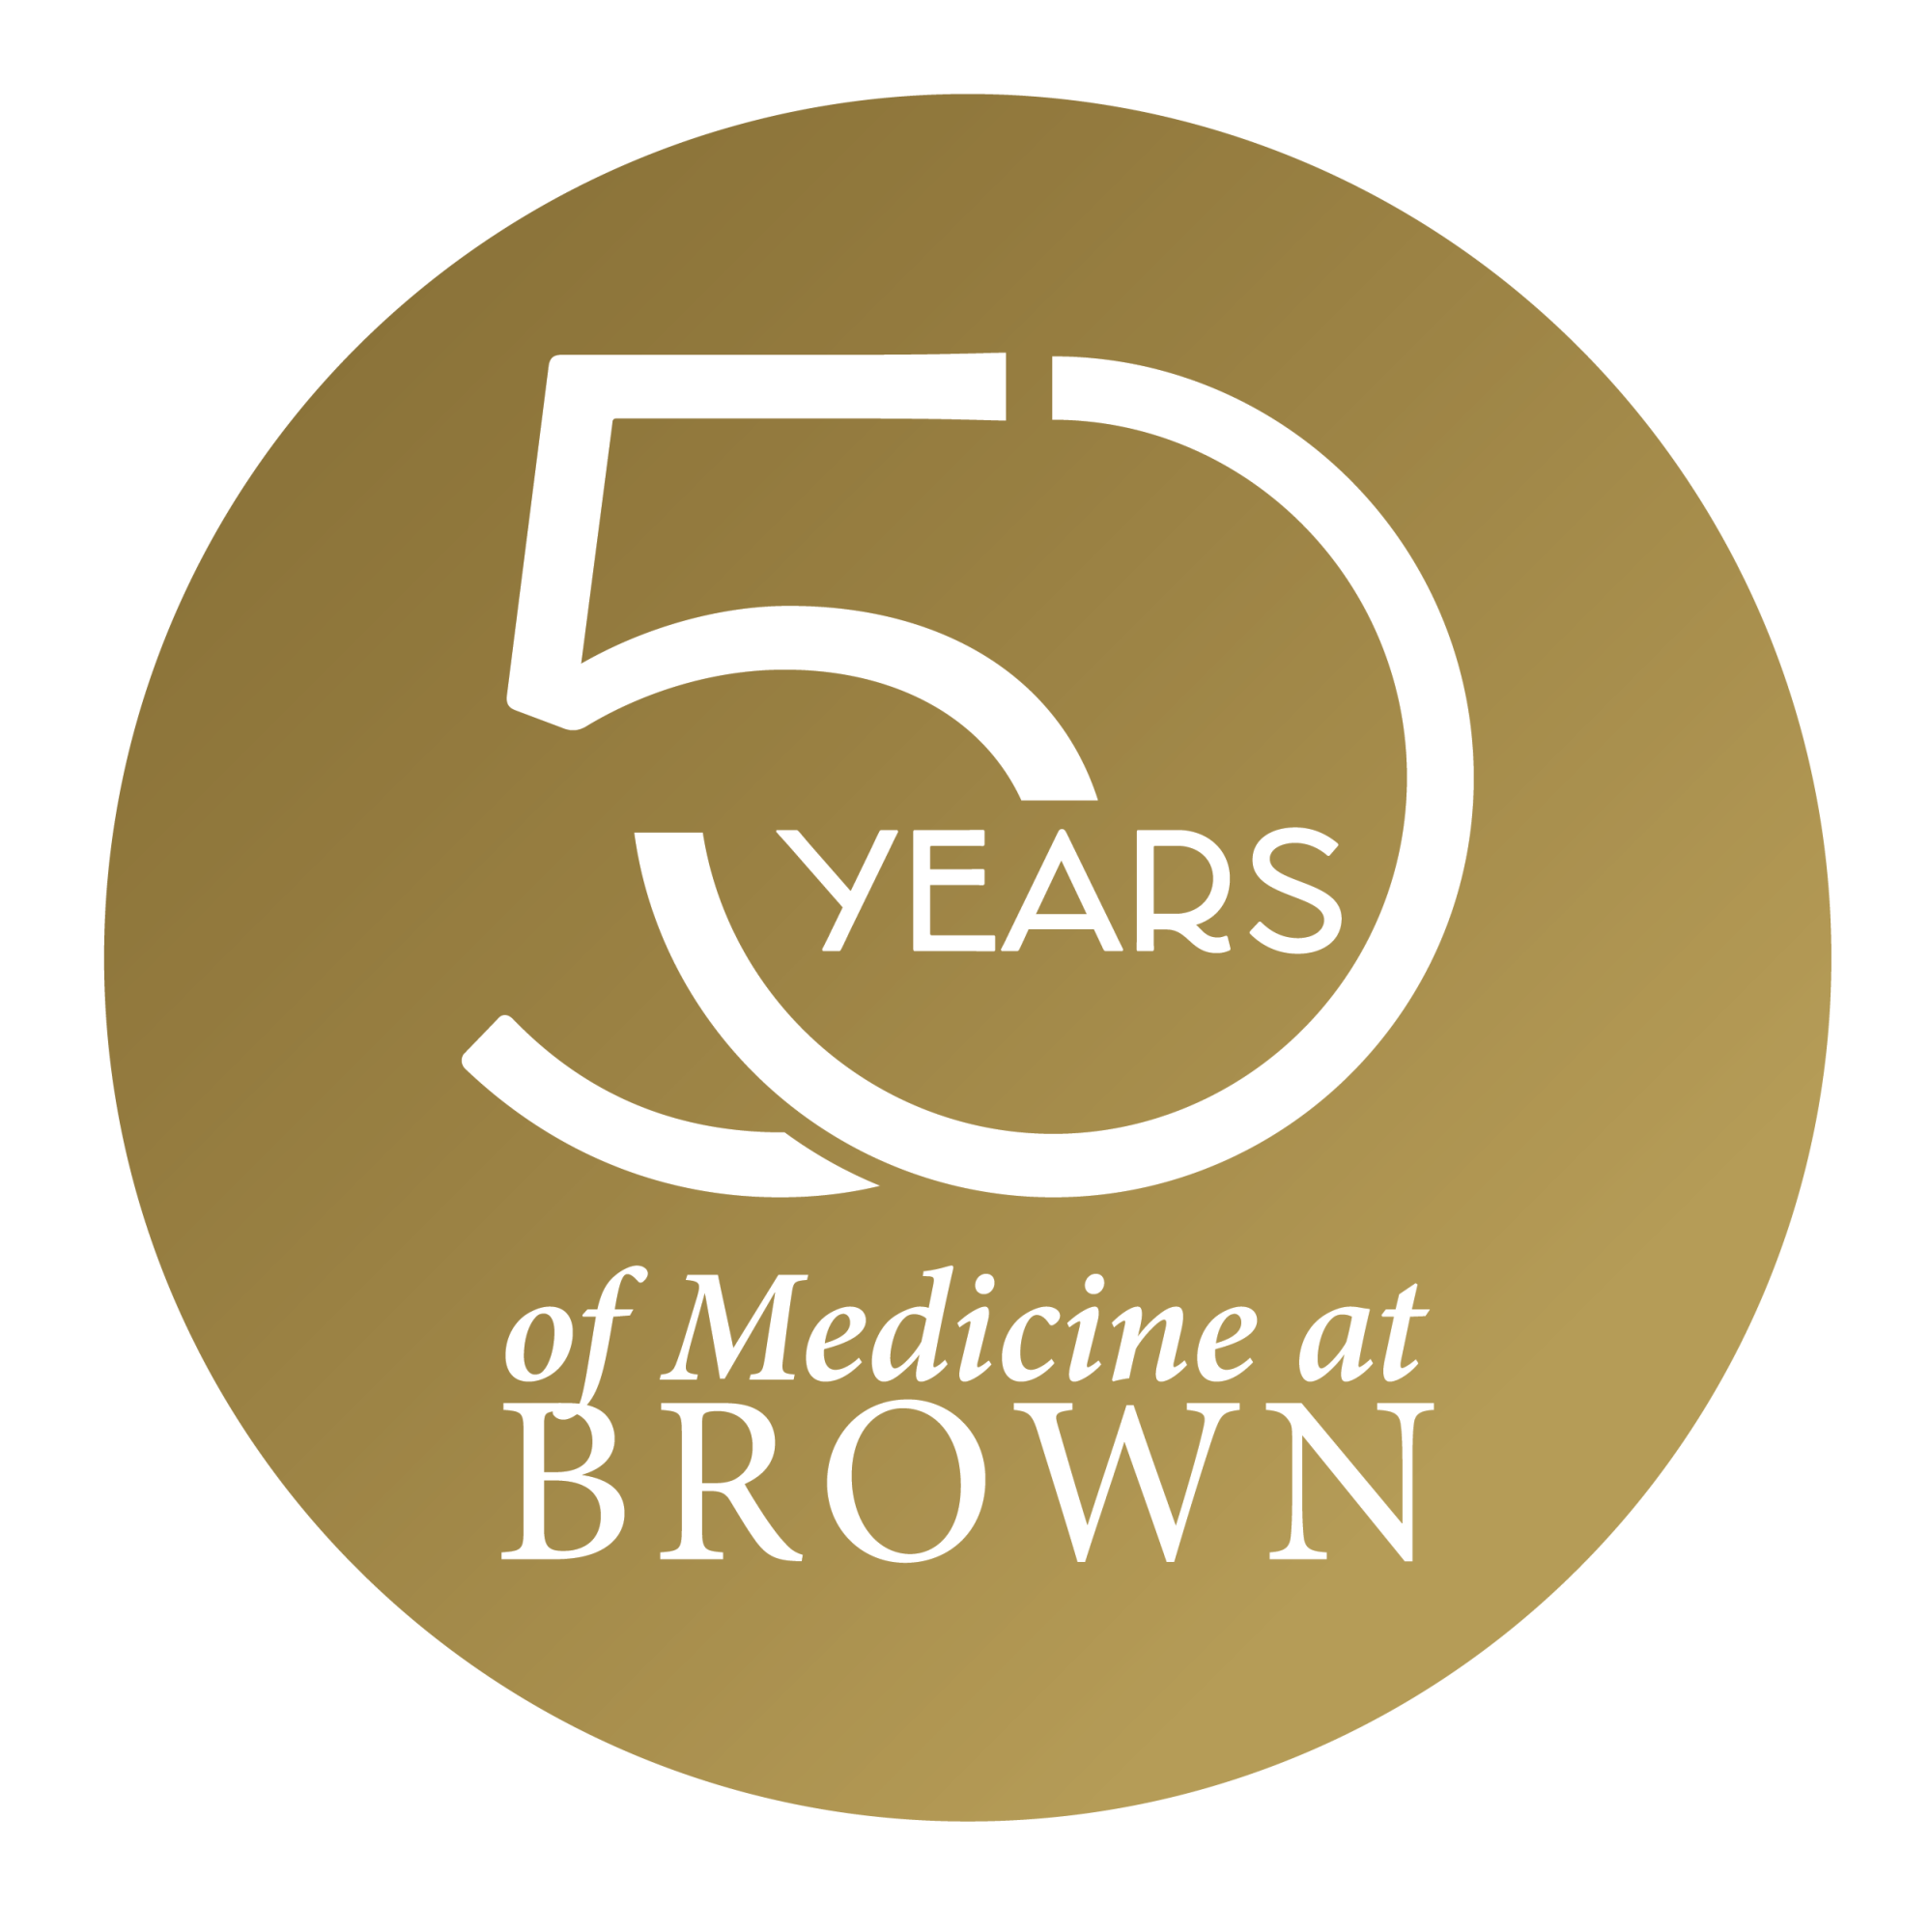 50 years of medicine at Brown logo